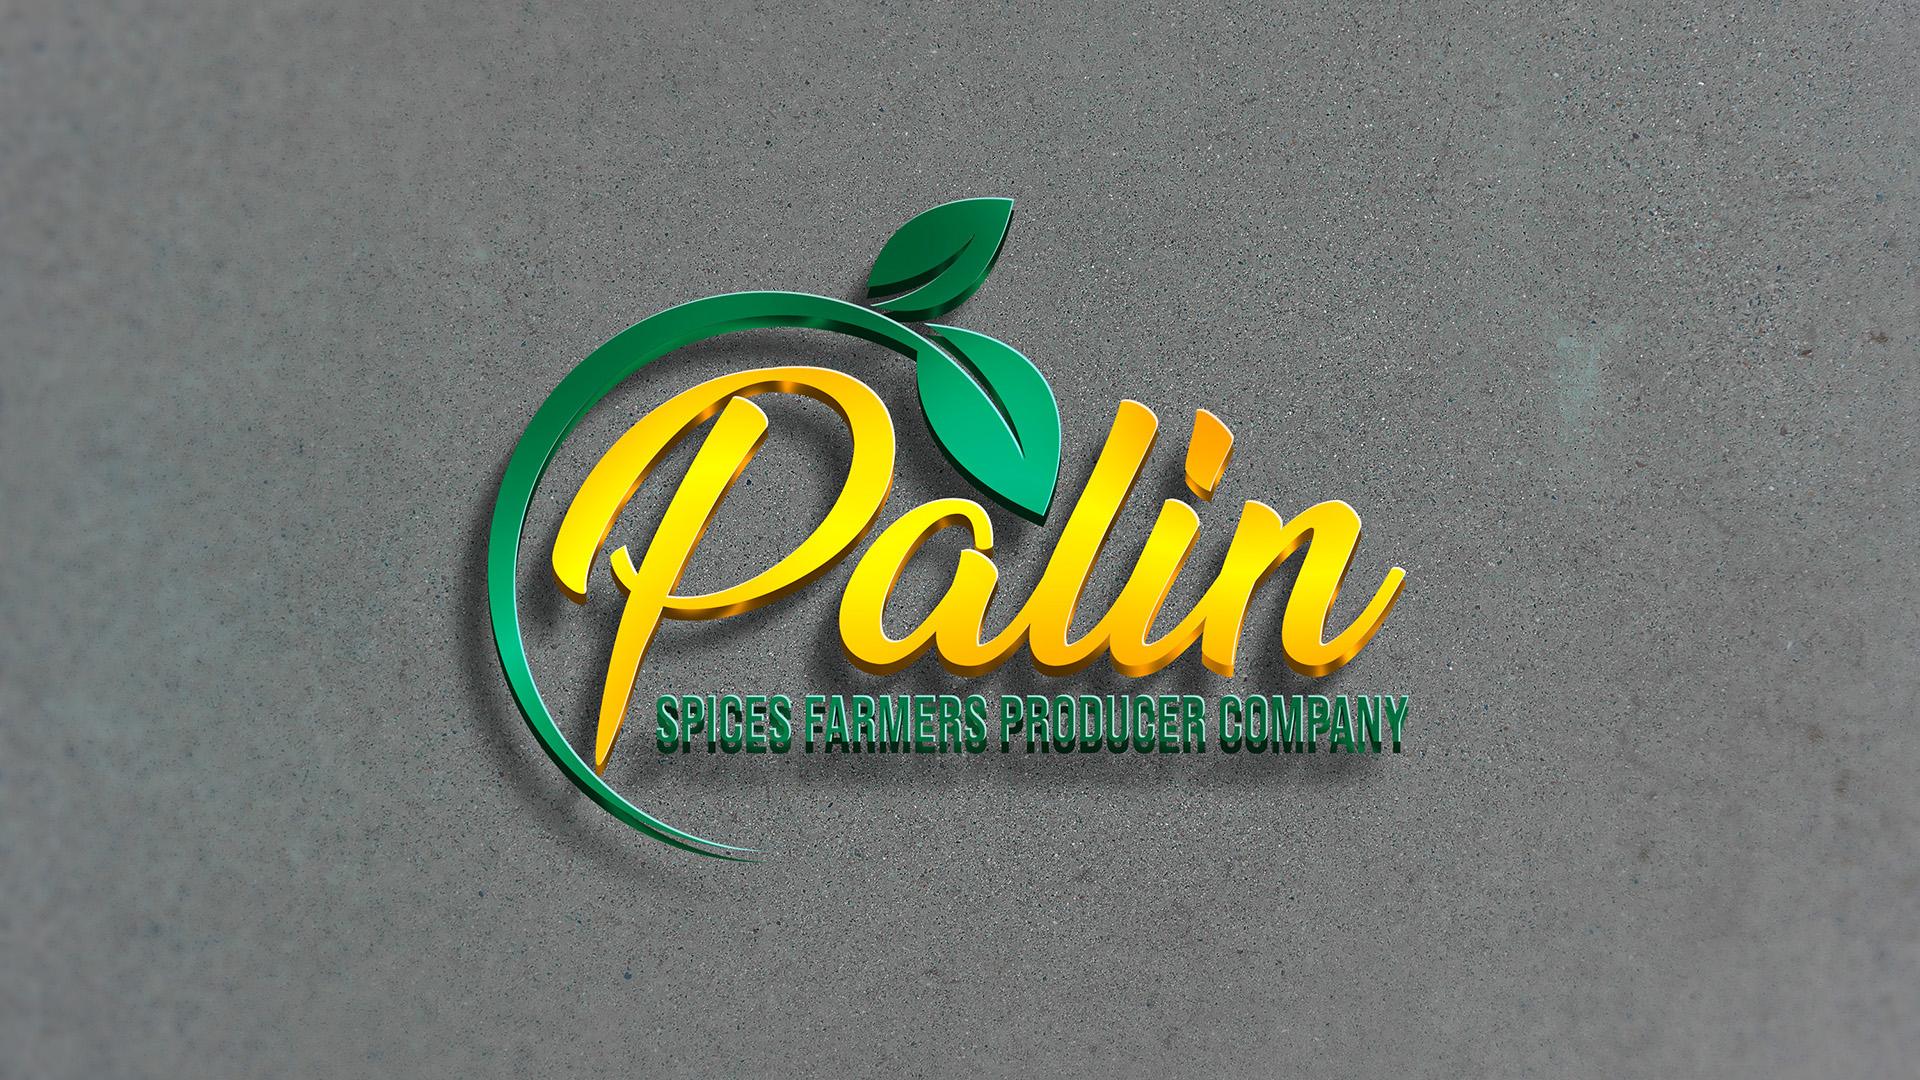 Palin Spices Farmers Producer Company of Kra Daadi District, Arunachal Pradesh.